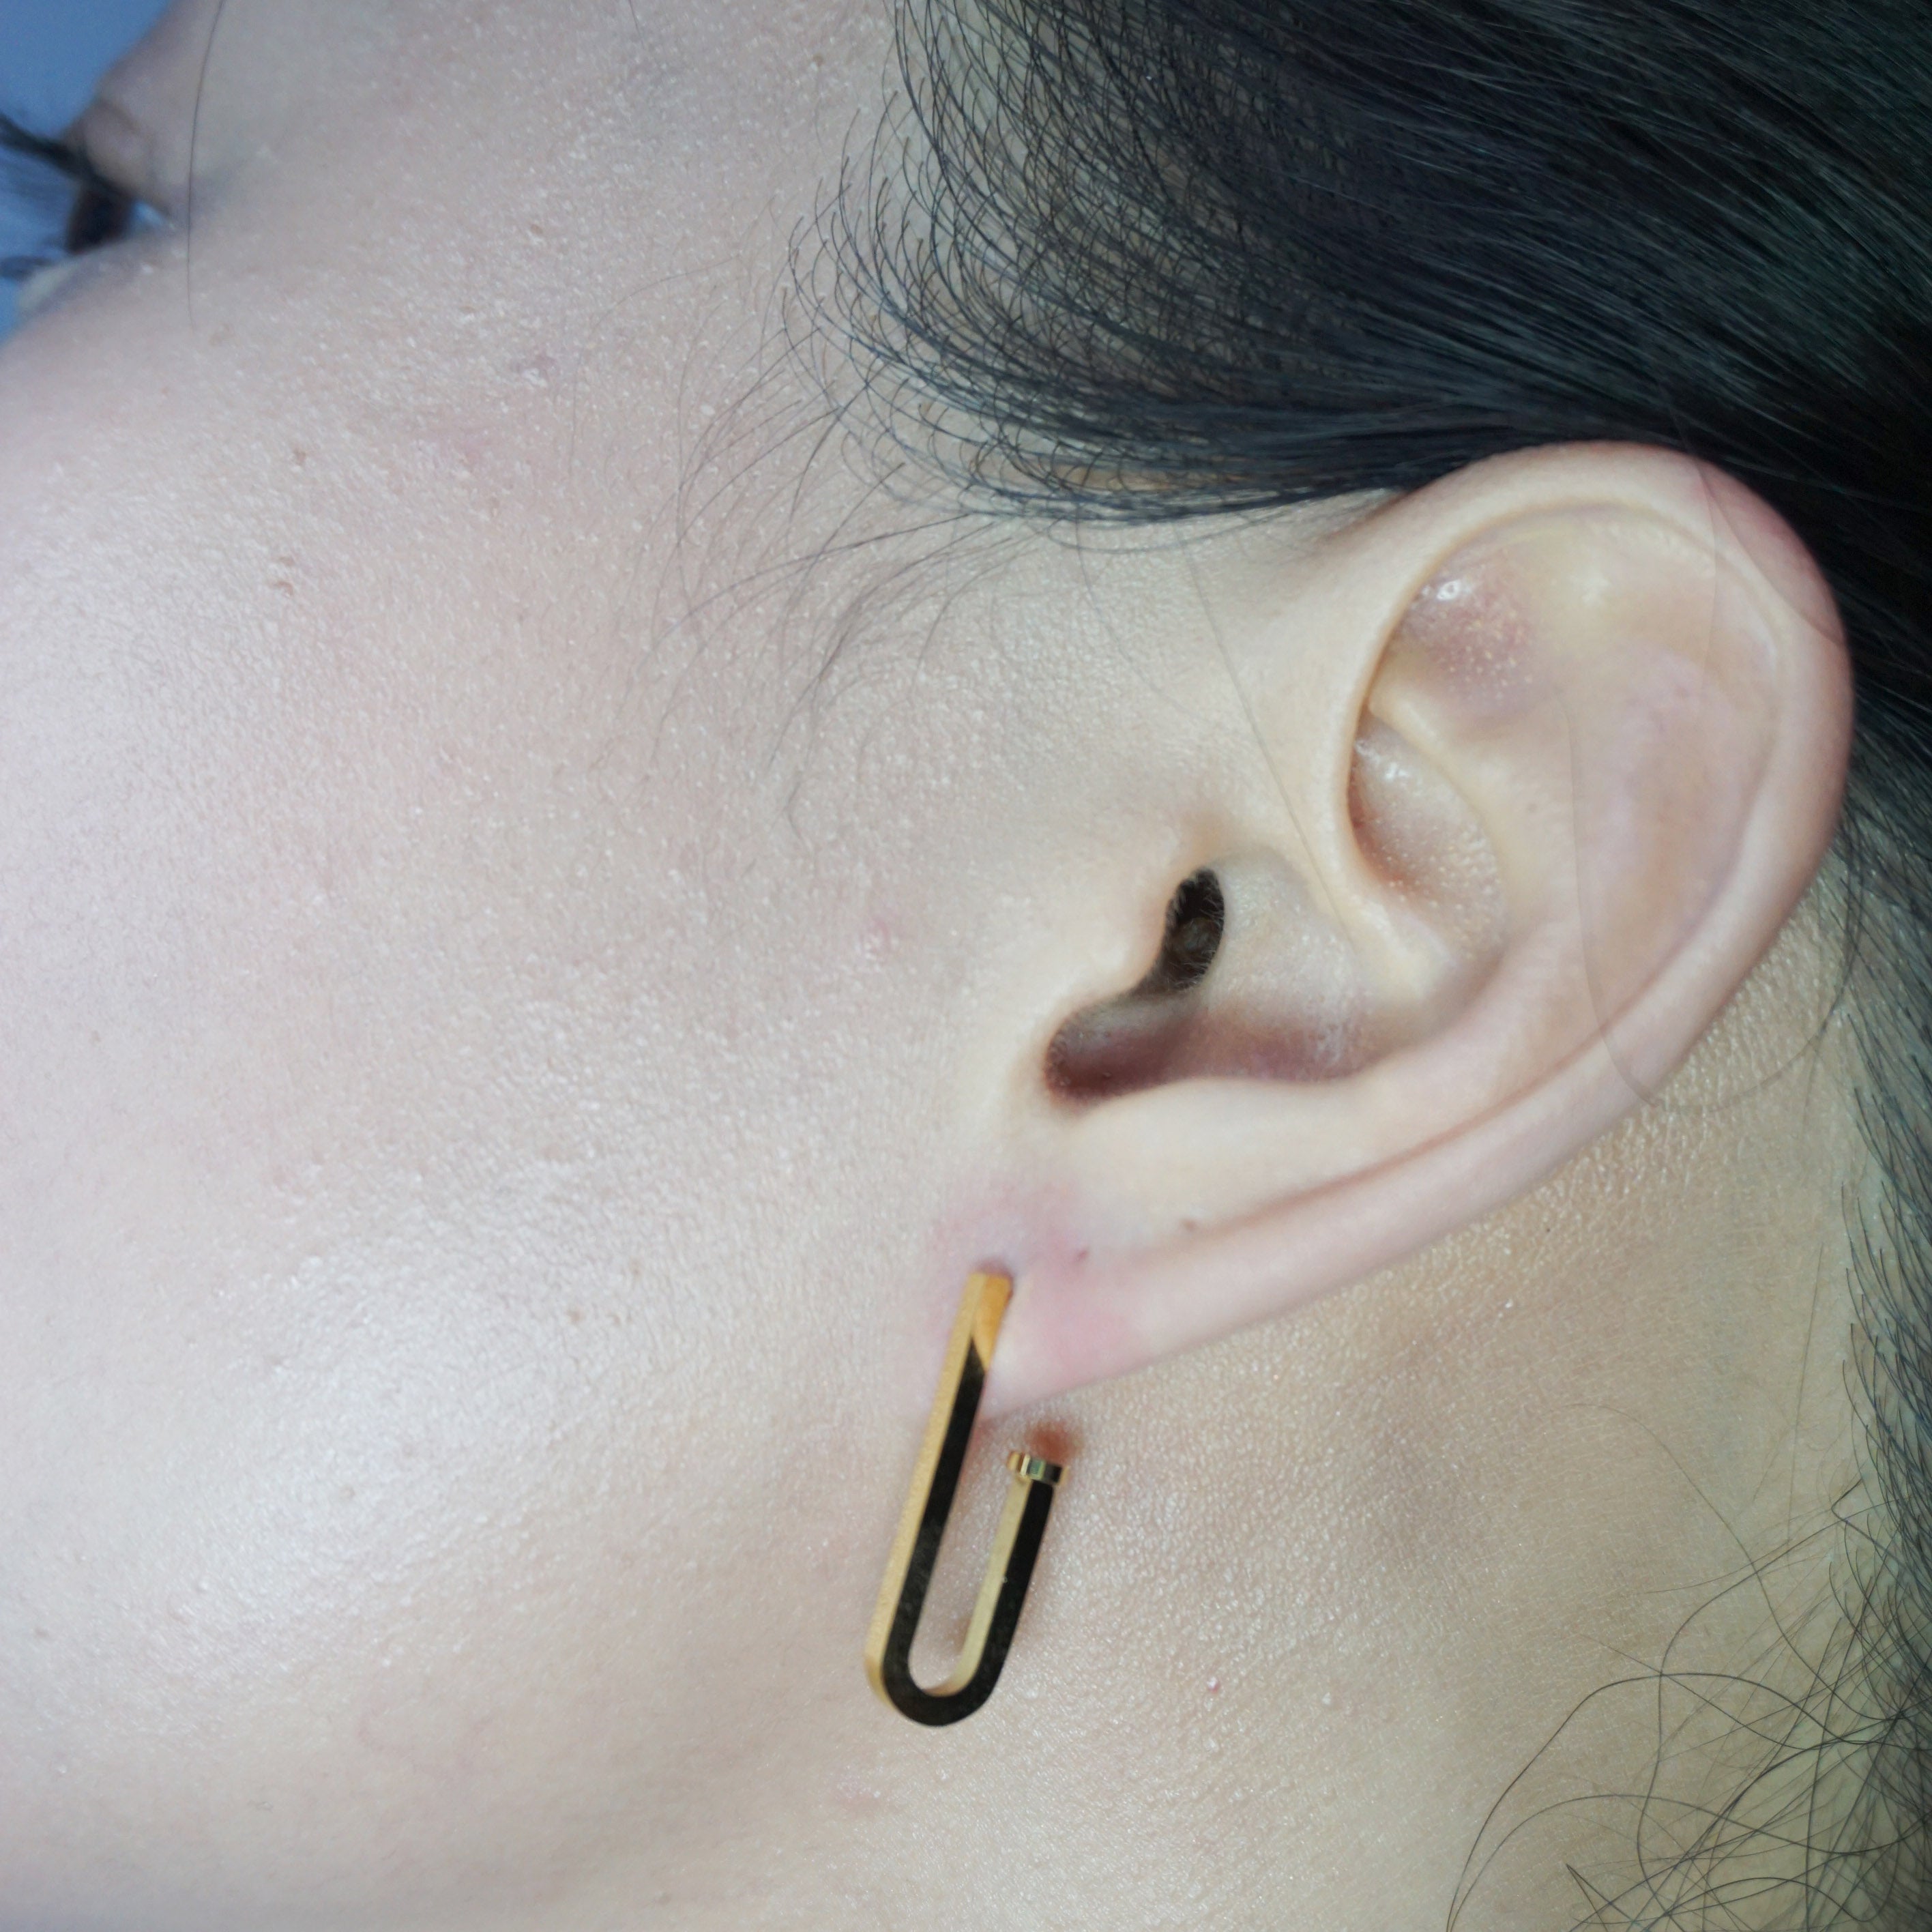 IVONOVI - Analogue Earring